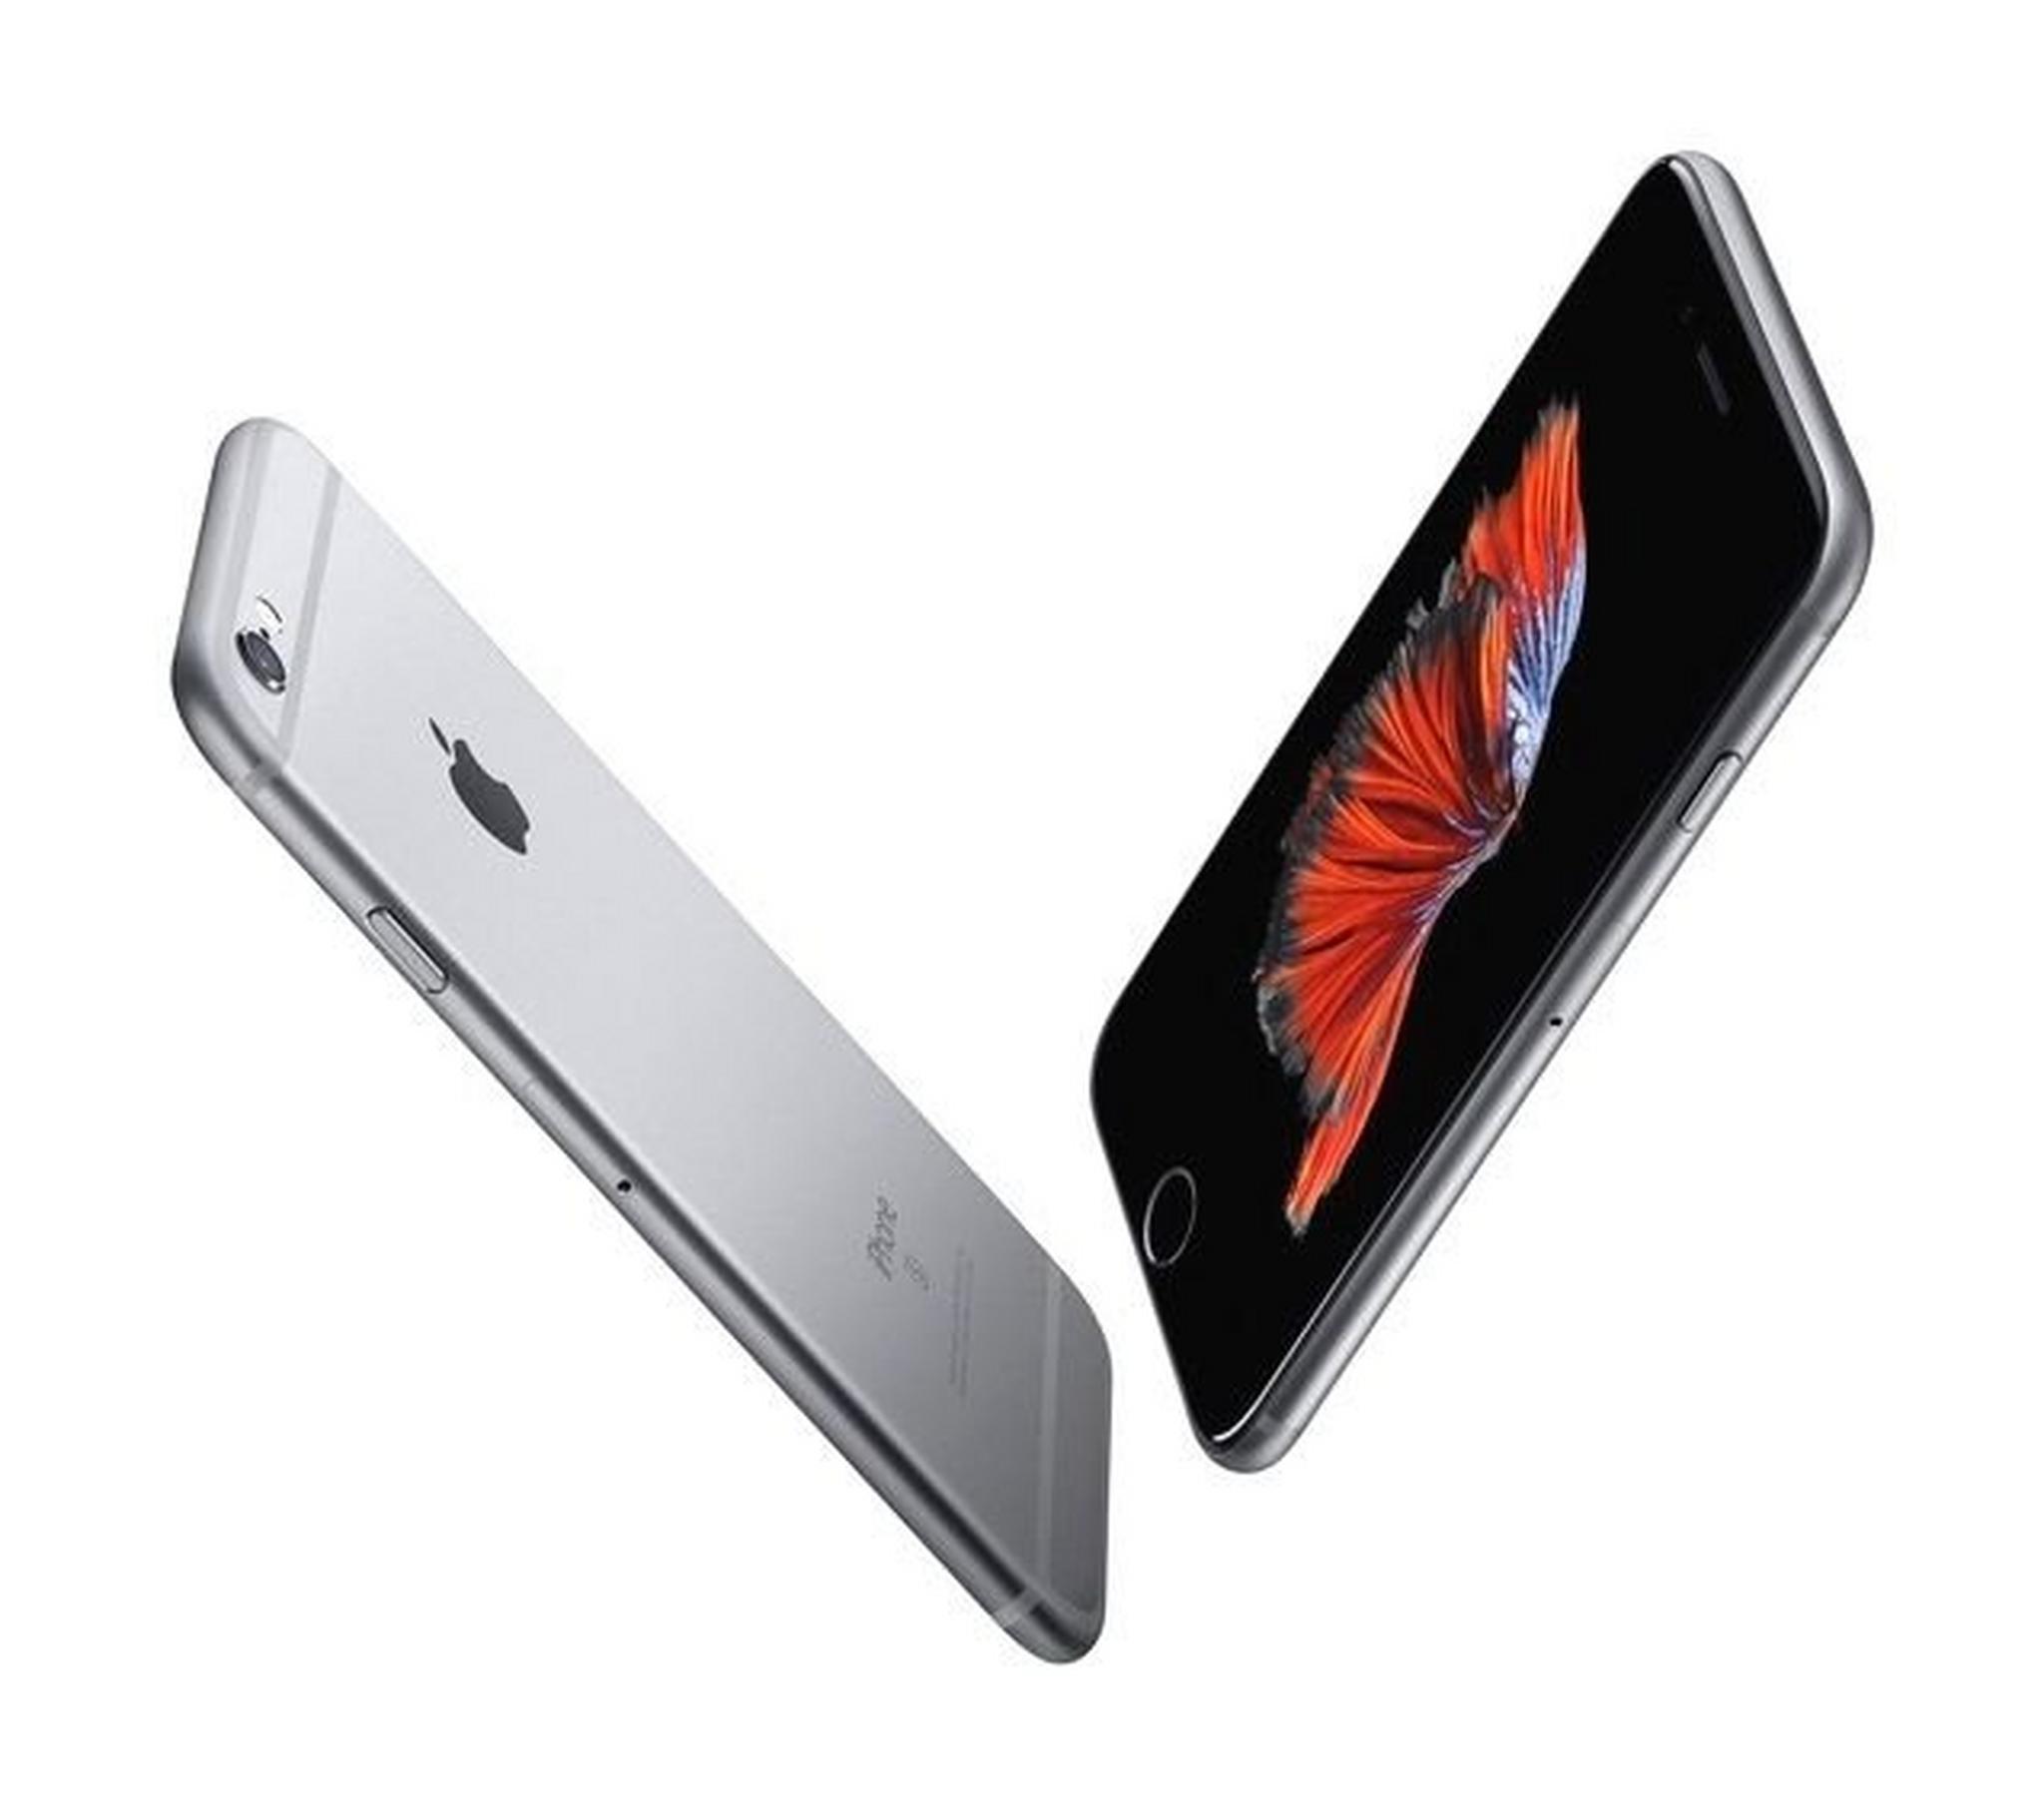 Apple iPhone 6S Plus 128GB 12MP 4G LTE 5.5-inch Smartphone - Grey